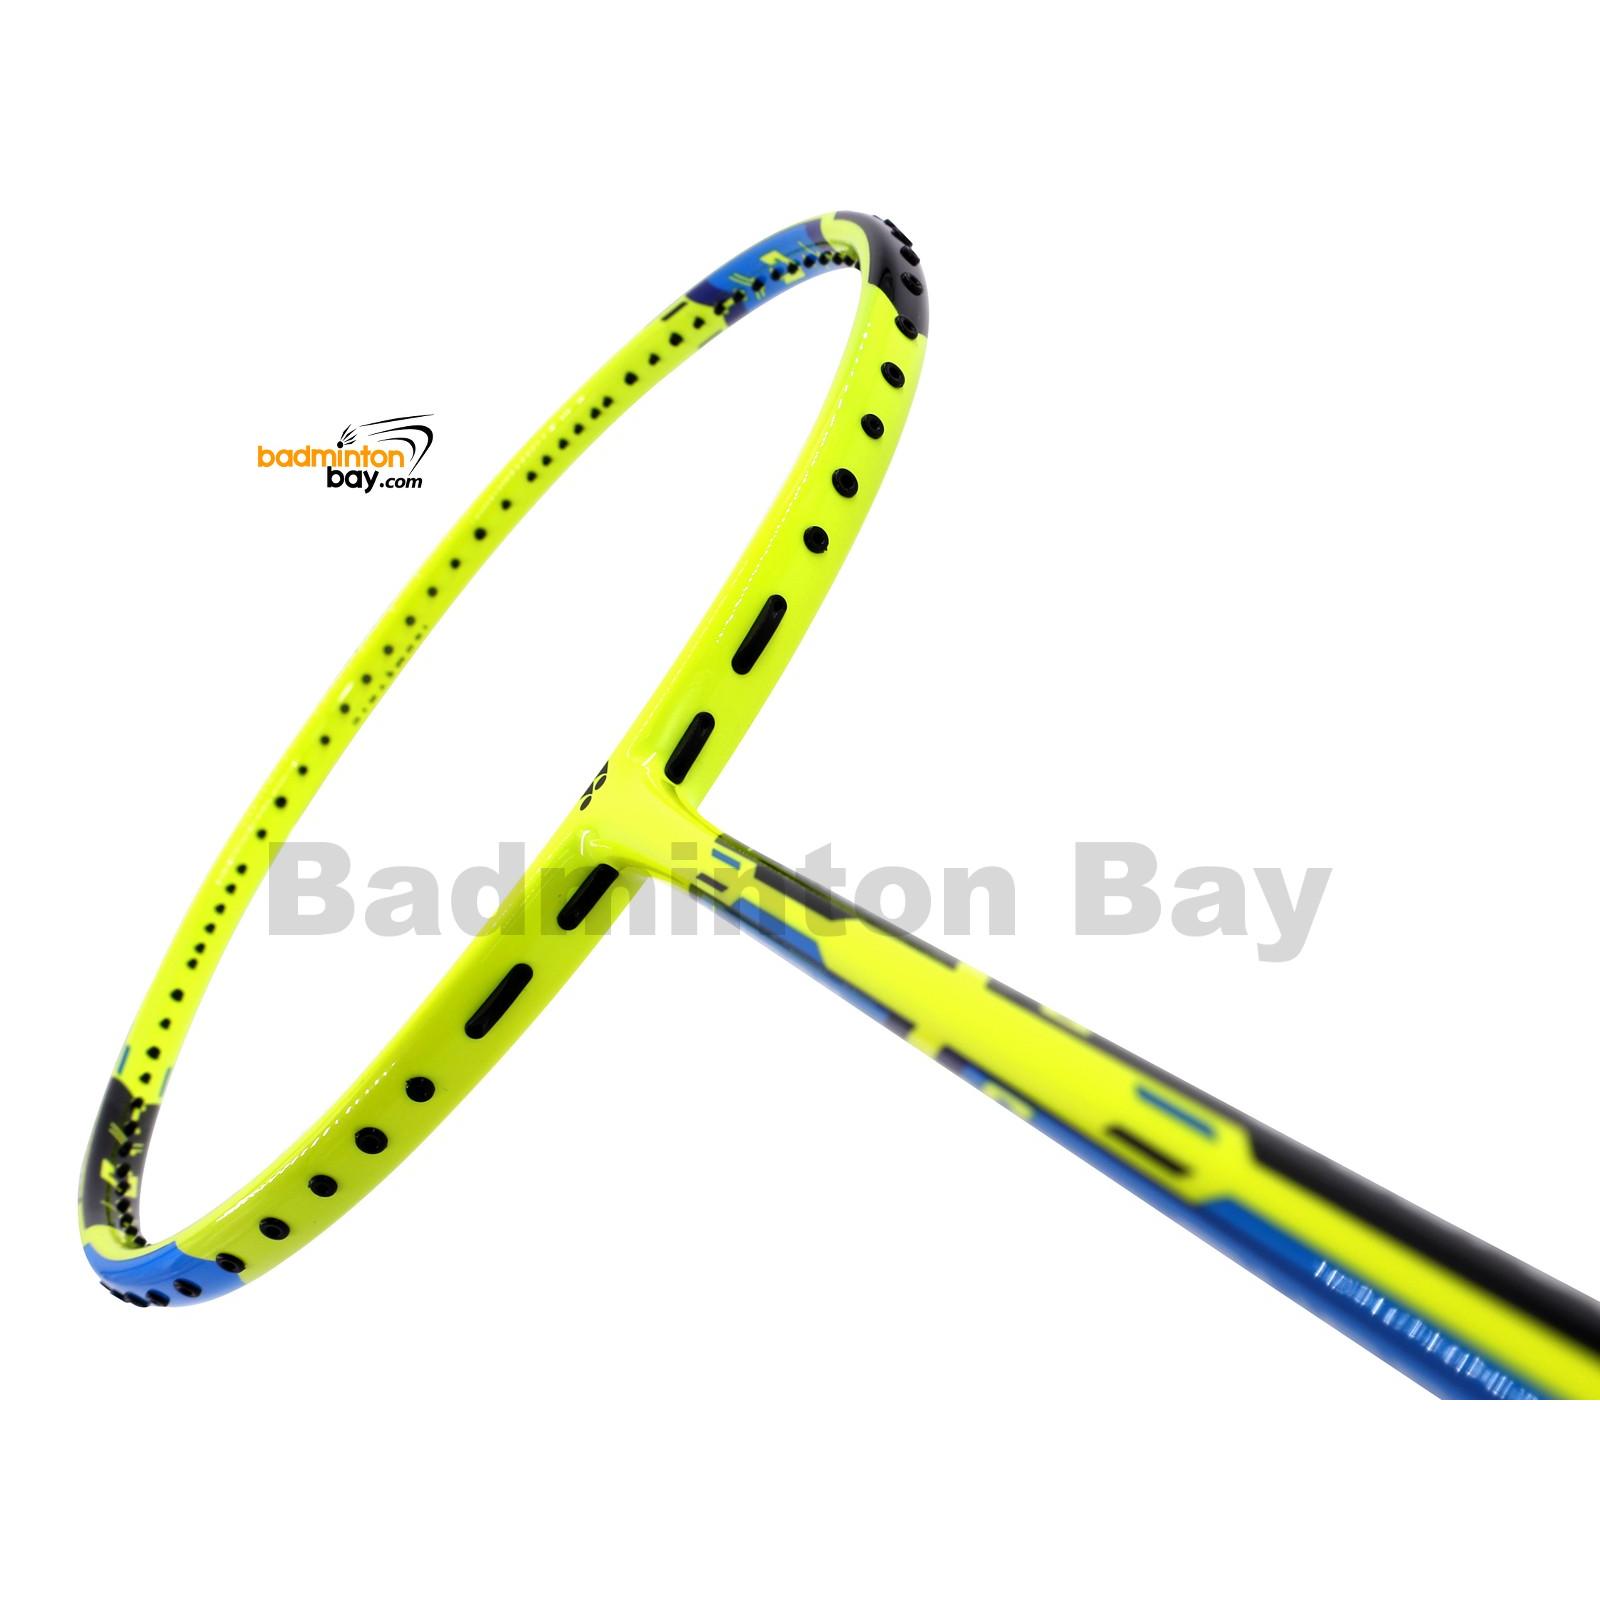 Yonex DUORA 55 Flash Yellow Lime Badminton Racket DUORA-55EX FLY(4U-G5)